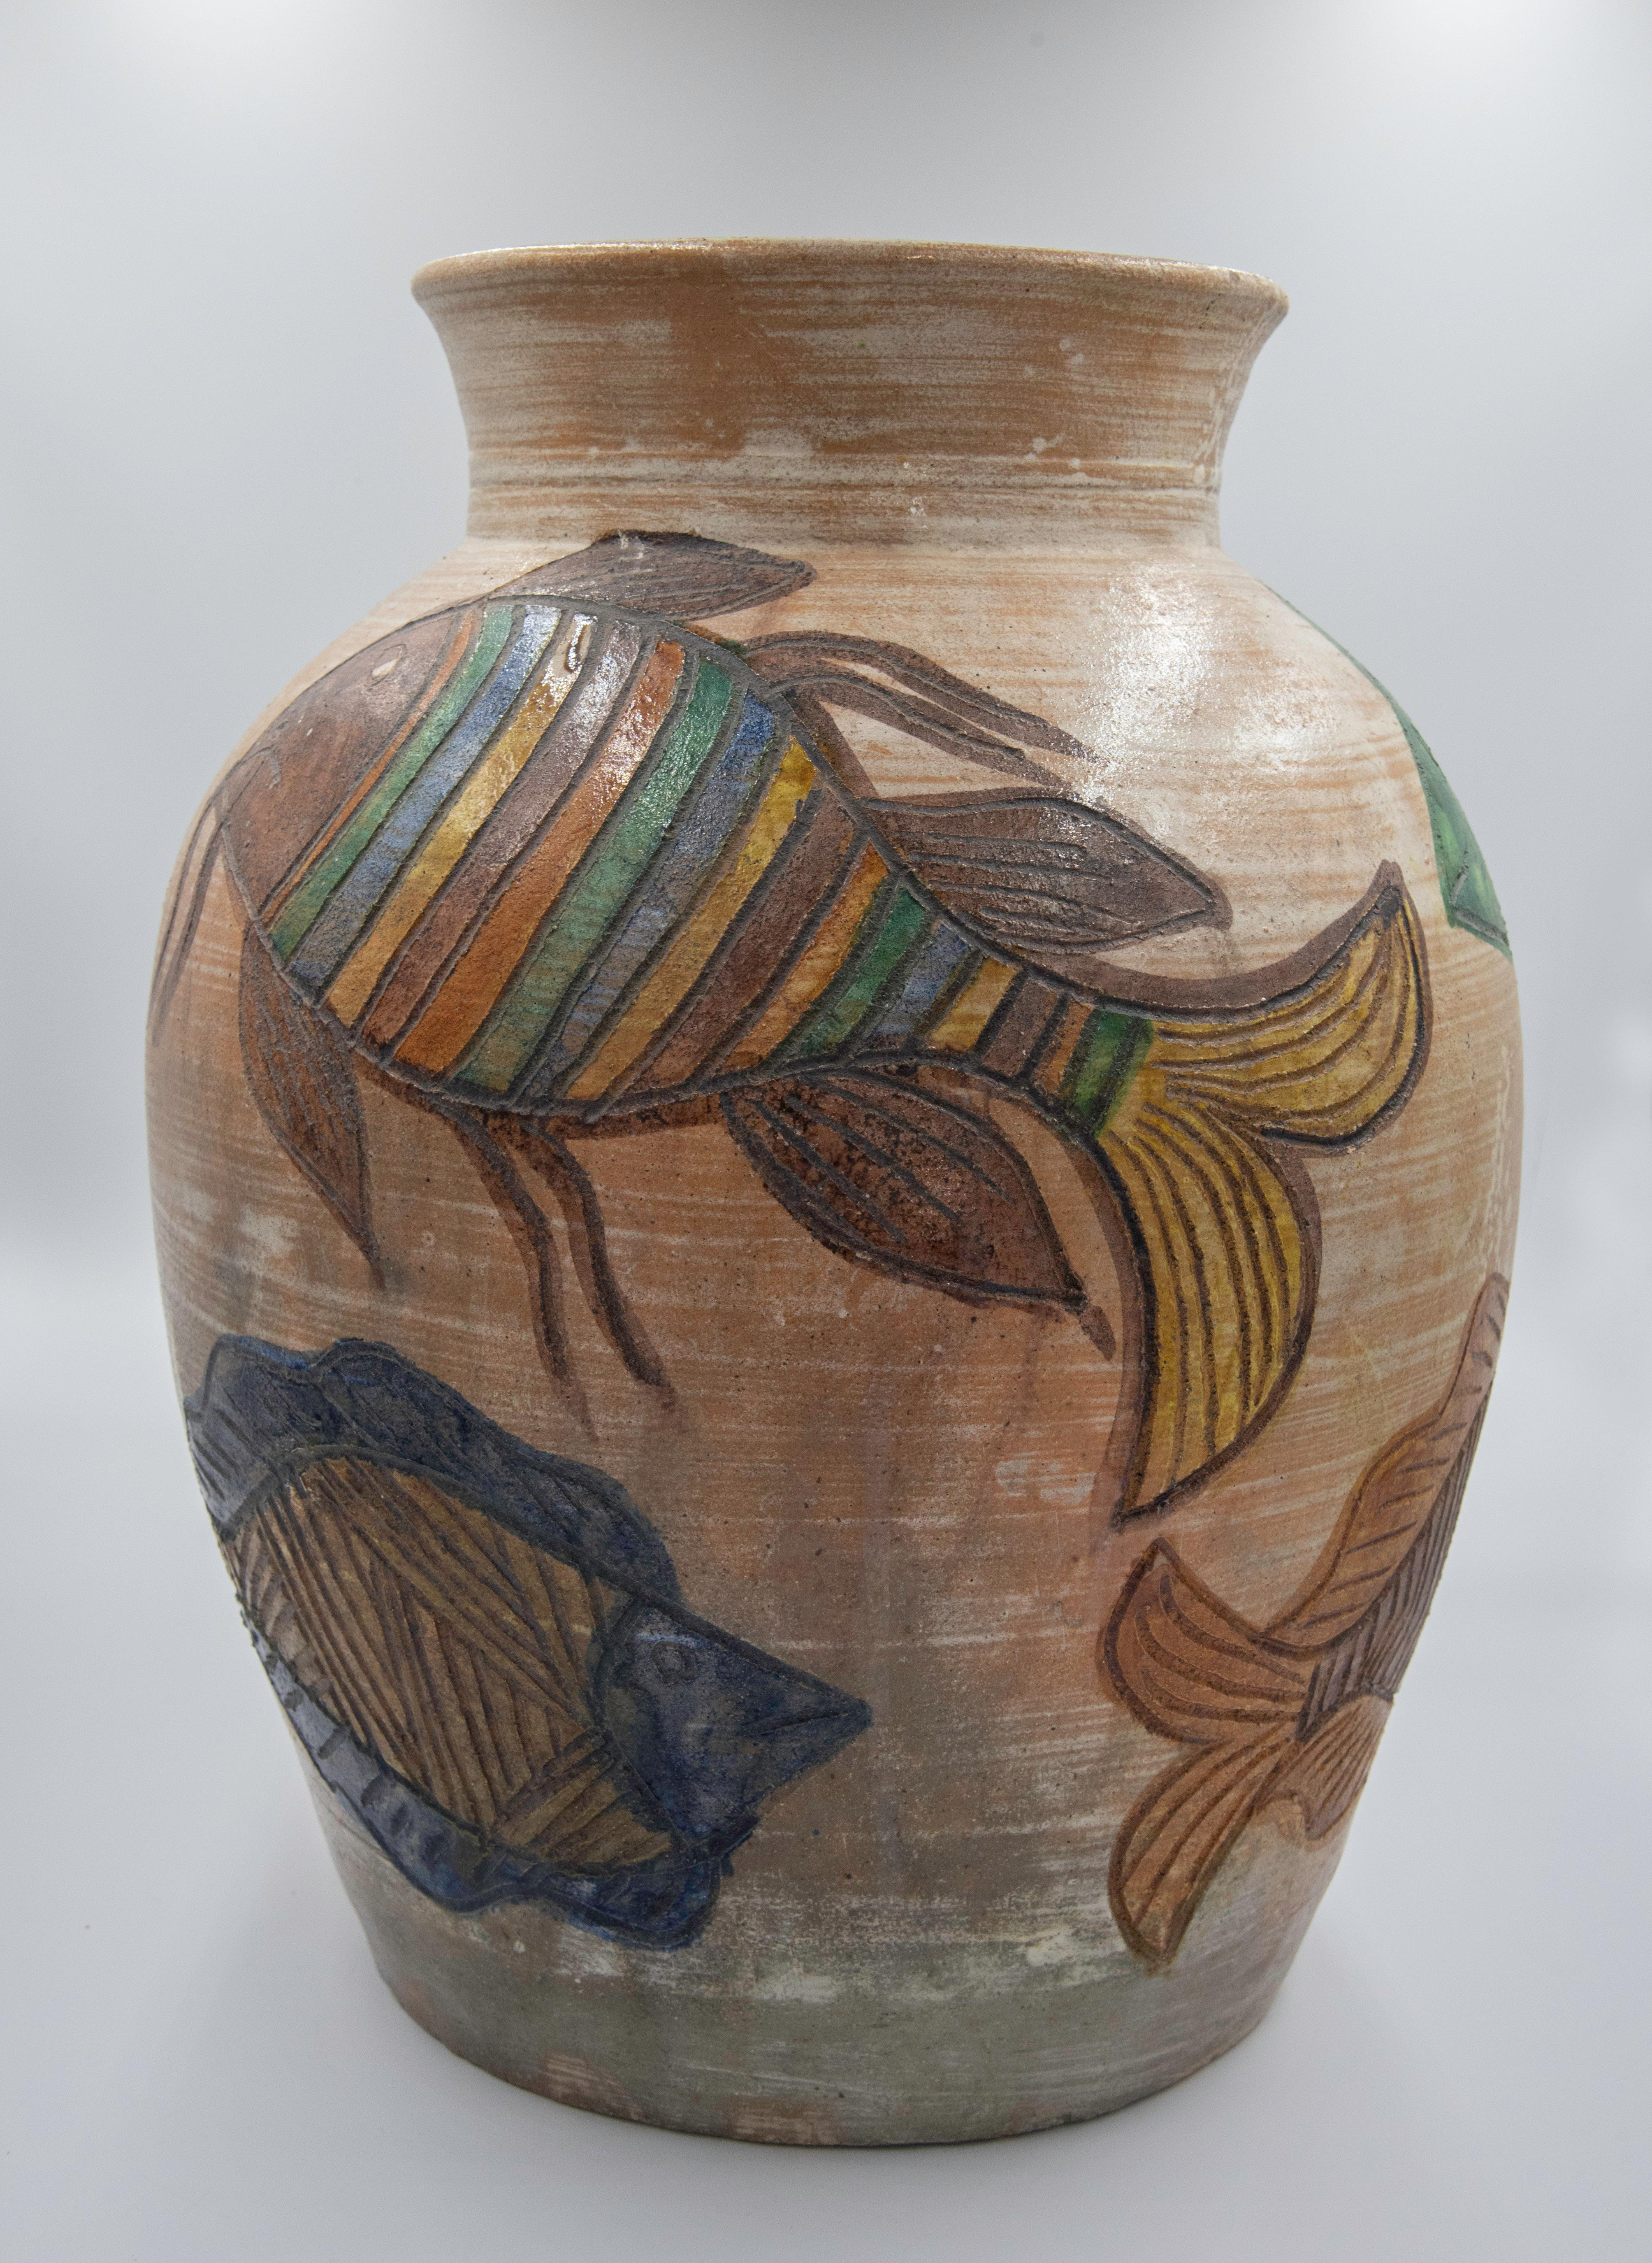 Mexican Ceramic Jug Vase Fishes 1994 Dolores Porras Folk Art Decorative Vessel In Good Condition For Sale In Queretaro, Queretaro